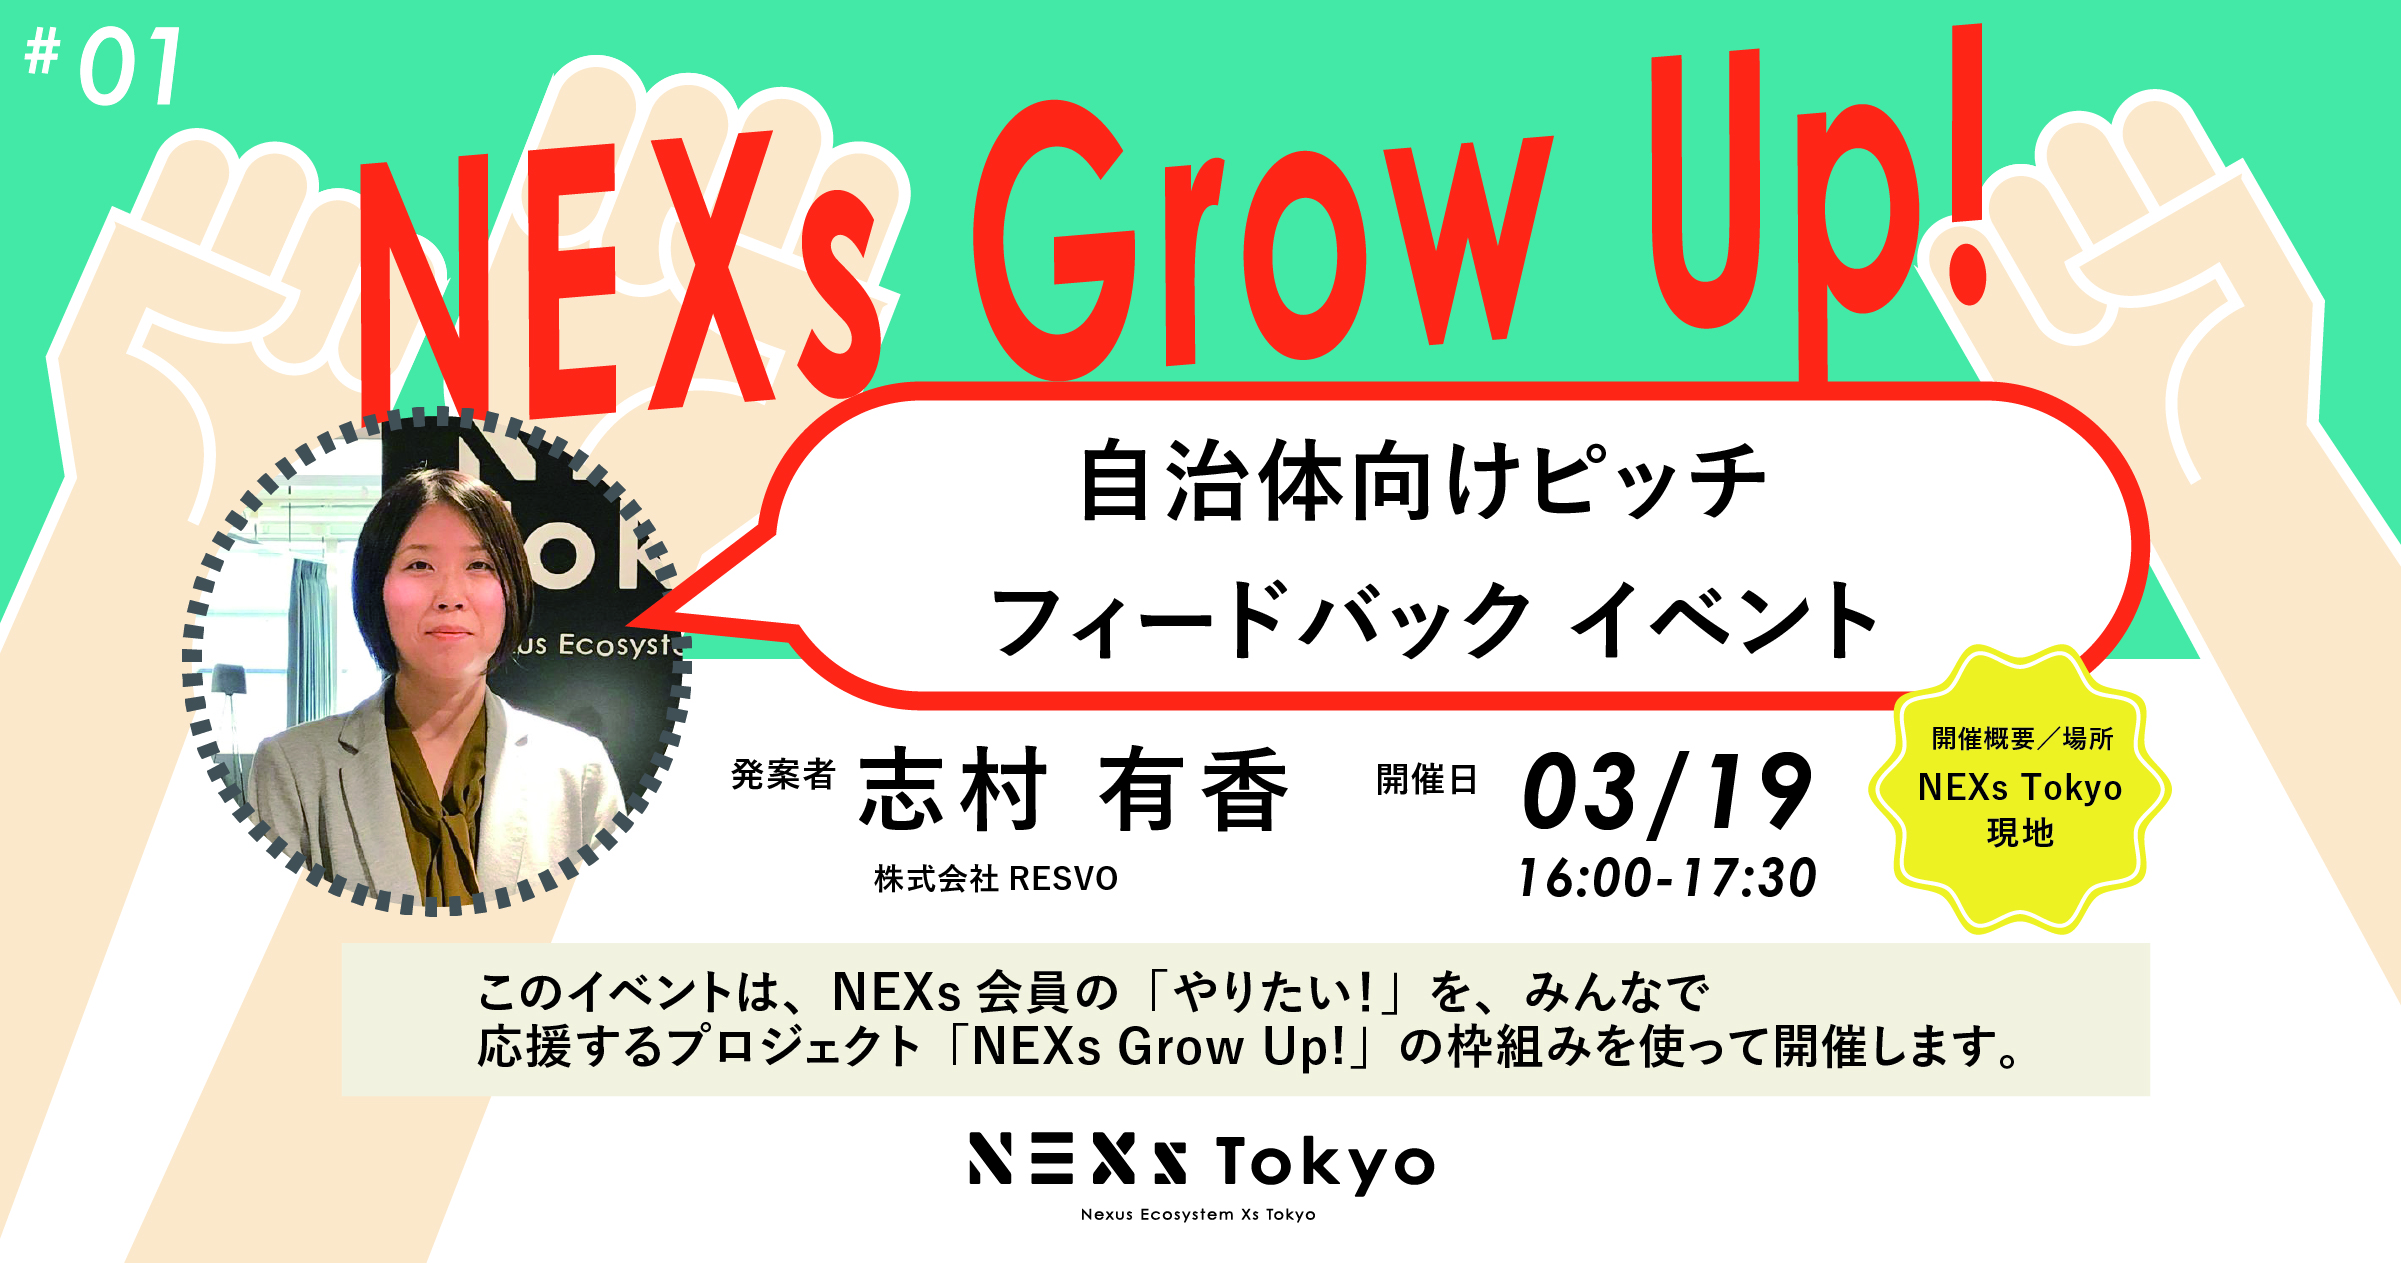 NEXs Grow Up!-自治体向けピッチ フィードバックイベント-